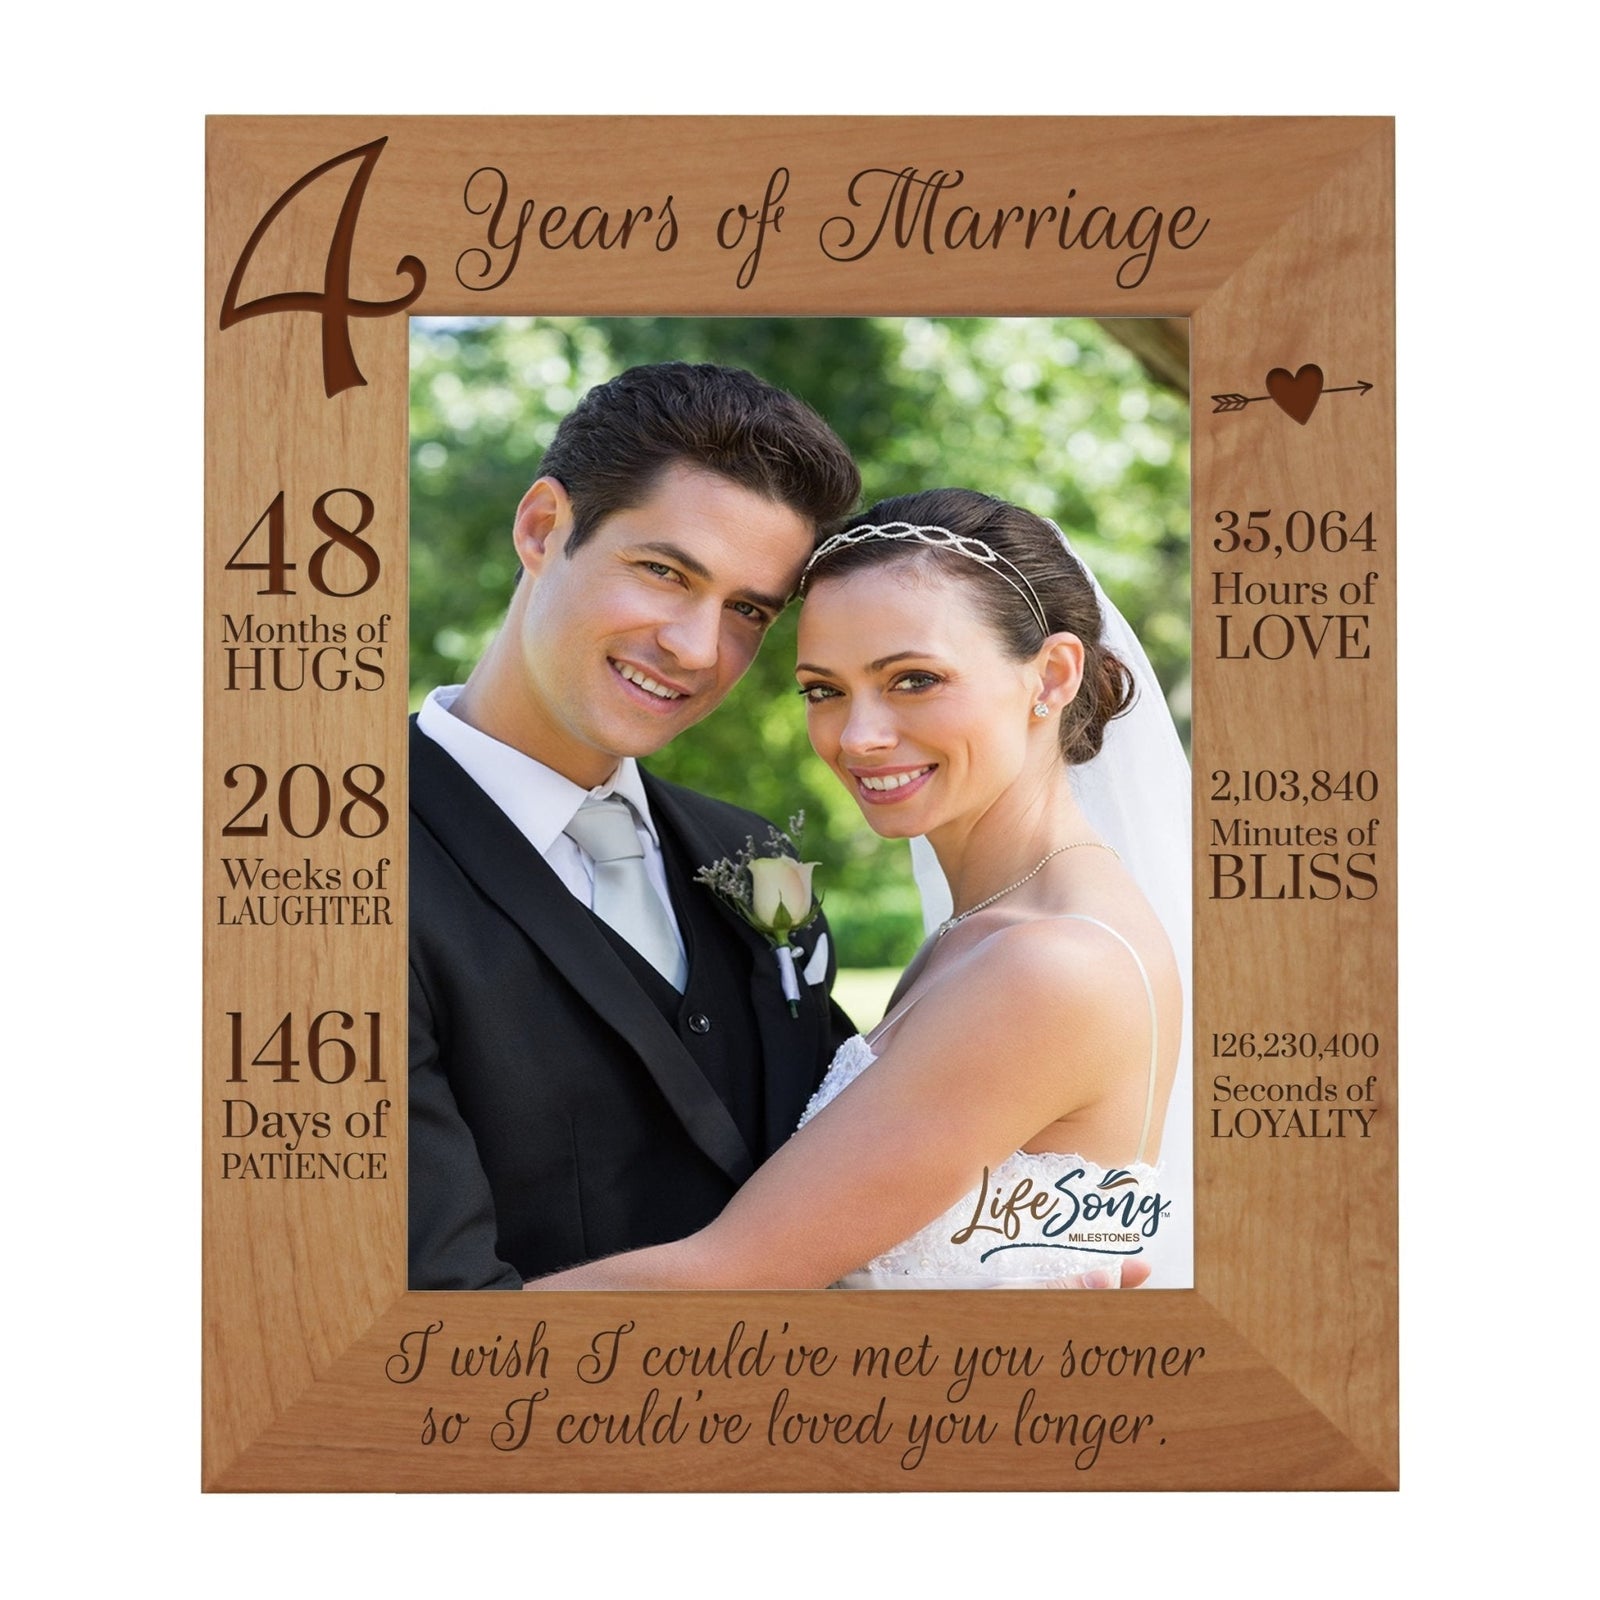 Couples 4th Wedding Anniversary Photo Frame Home Decor Gift Ideas - Met You Sooner - LifeSong Milestones